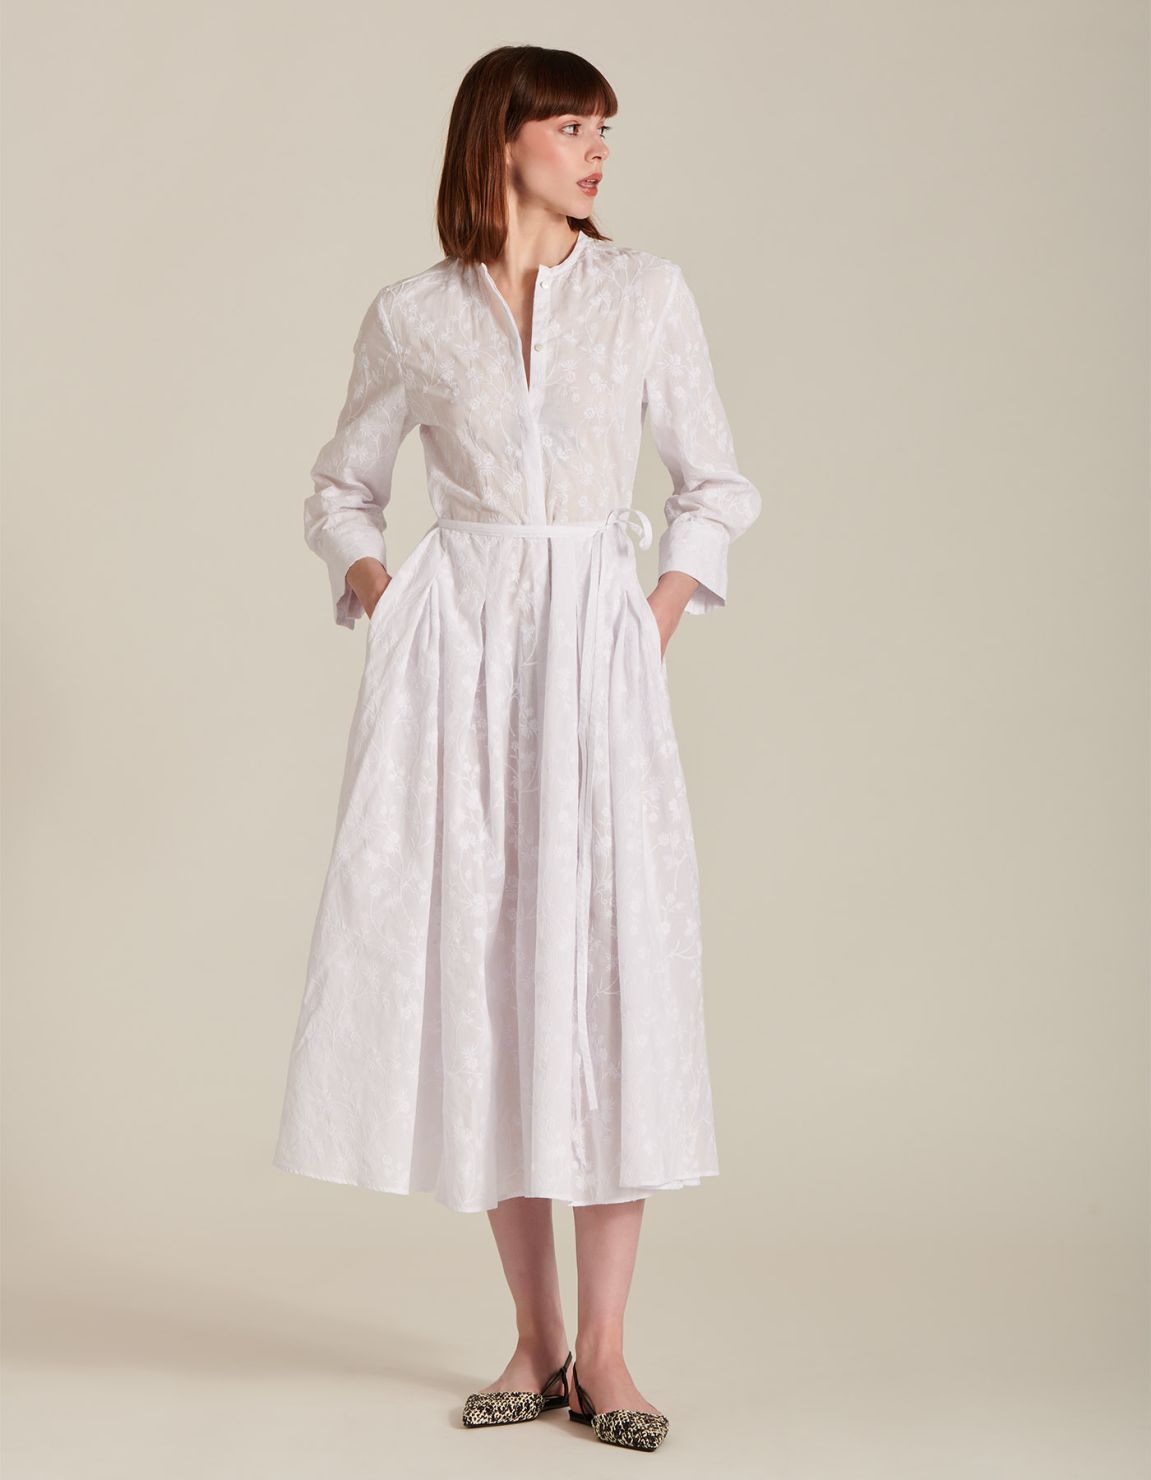 Dress White Cotton Pattern Regular Fit 3